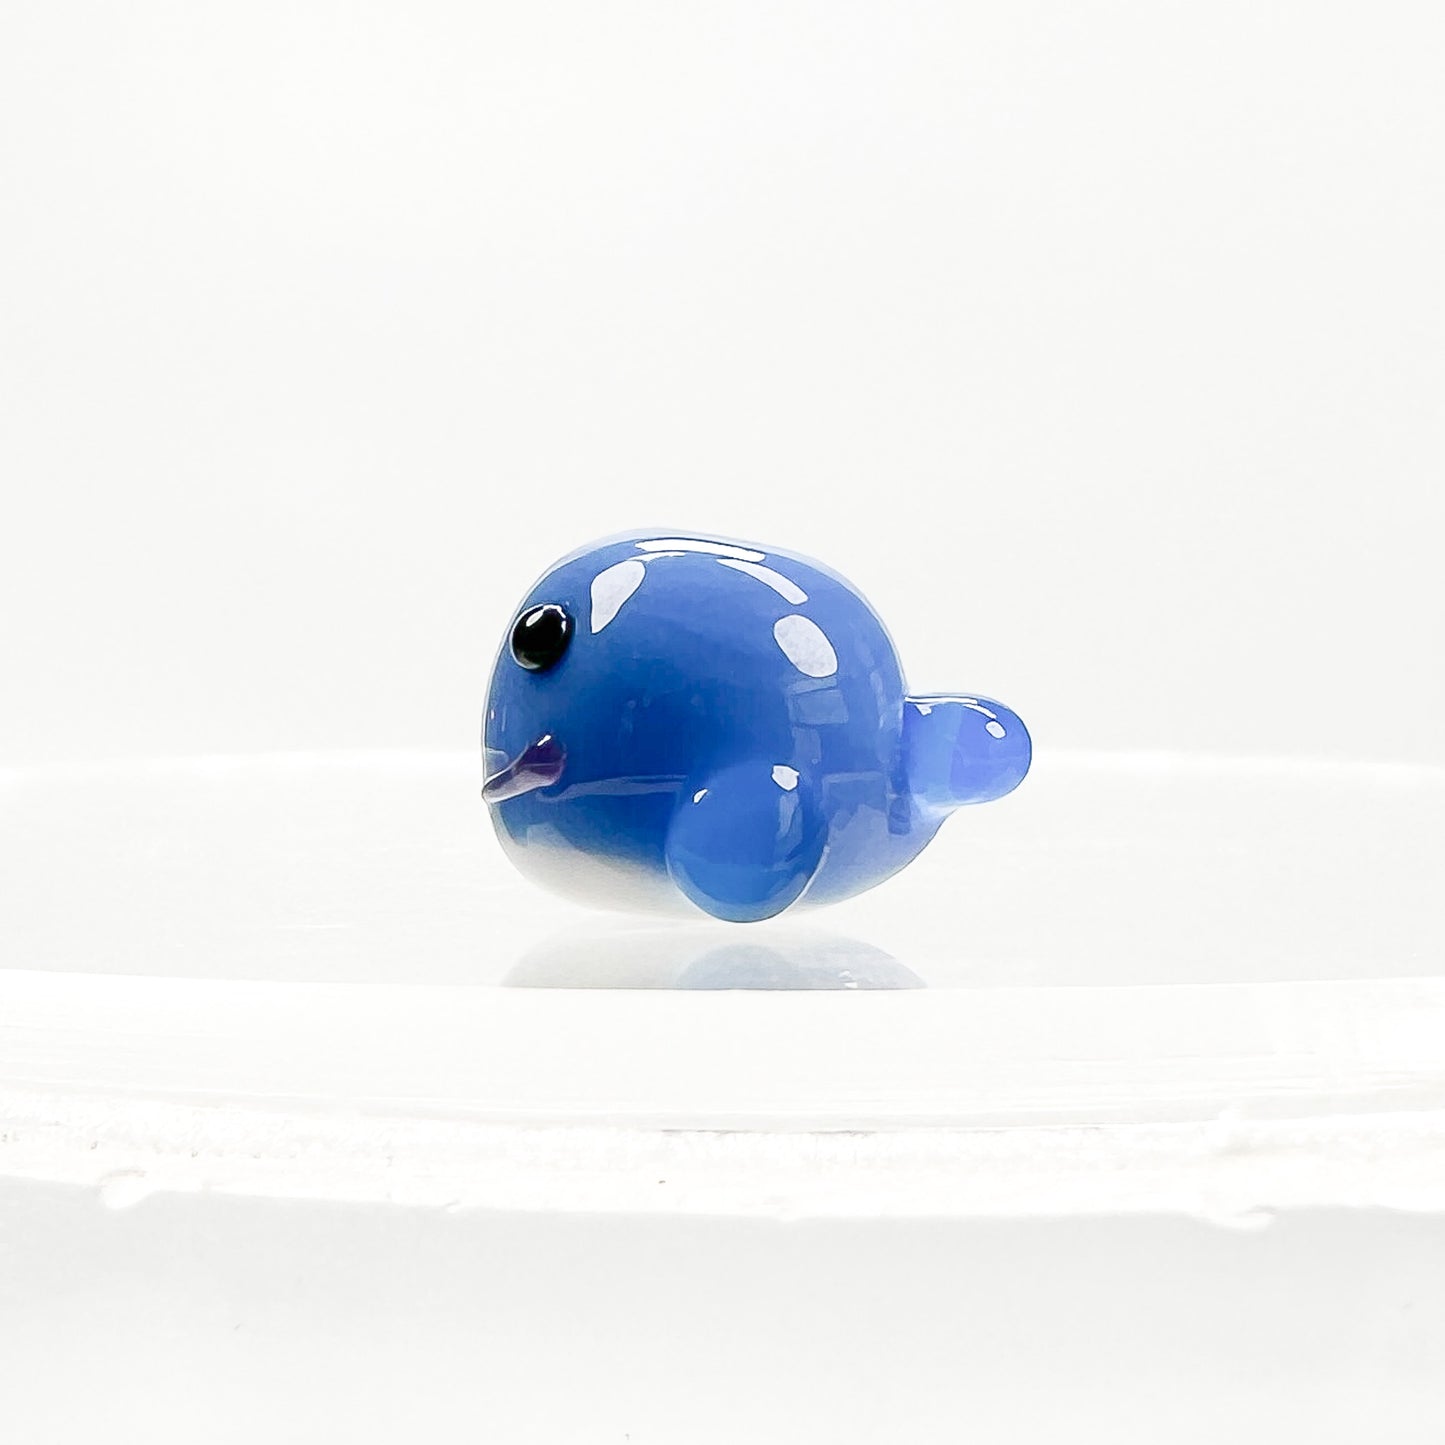 Chibi Handmade Glass Beads - Whale-The Bead Gallery Honolulu